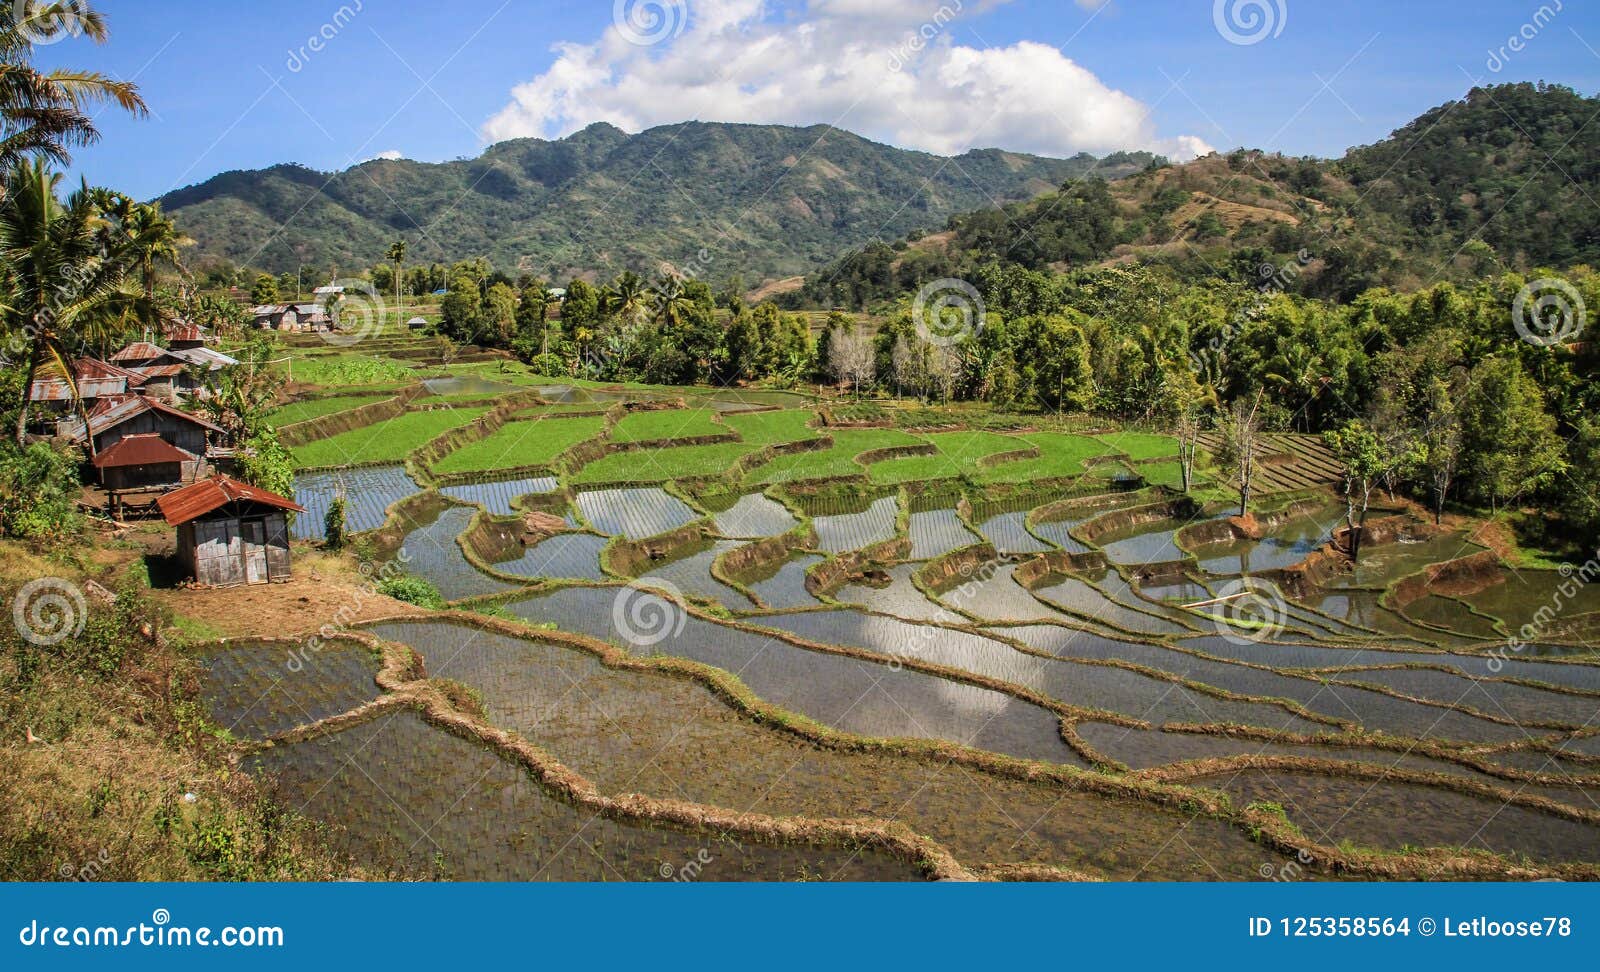 rice paddies in the beautiful and luxurious countryside around bajawa nusa tenggara, flores island, indonesia